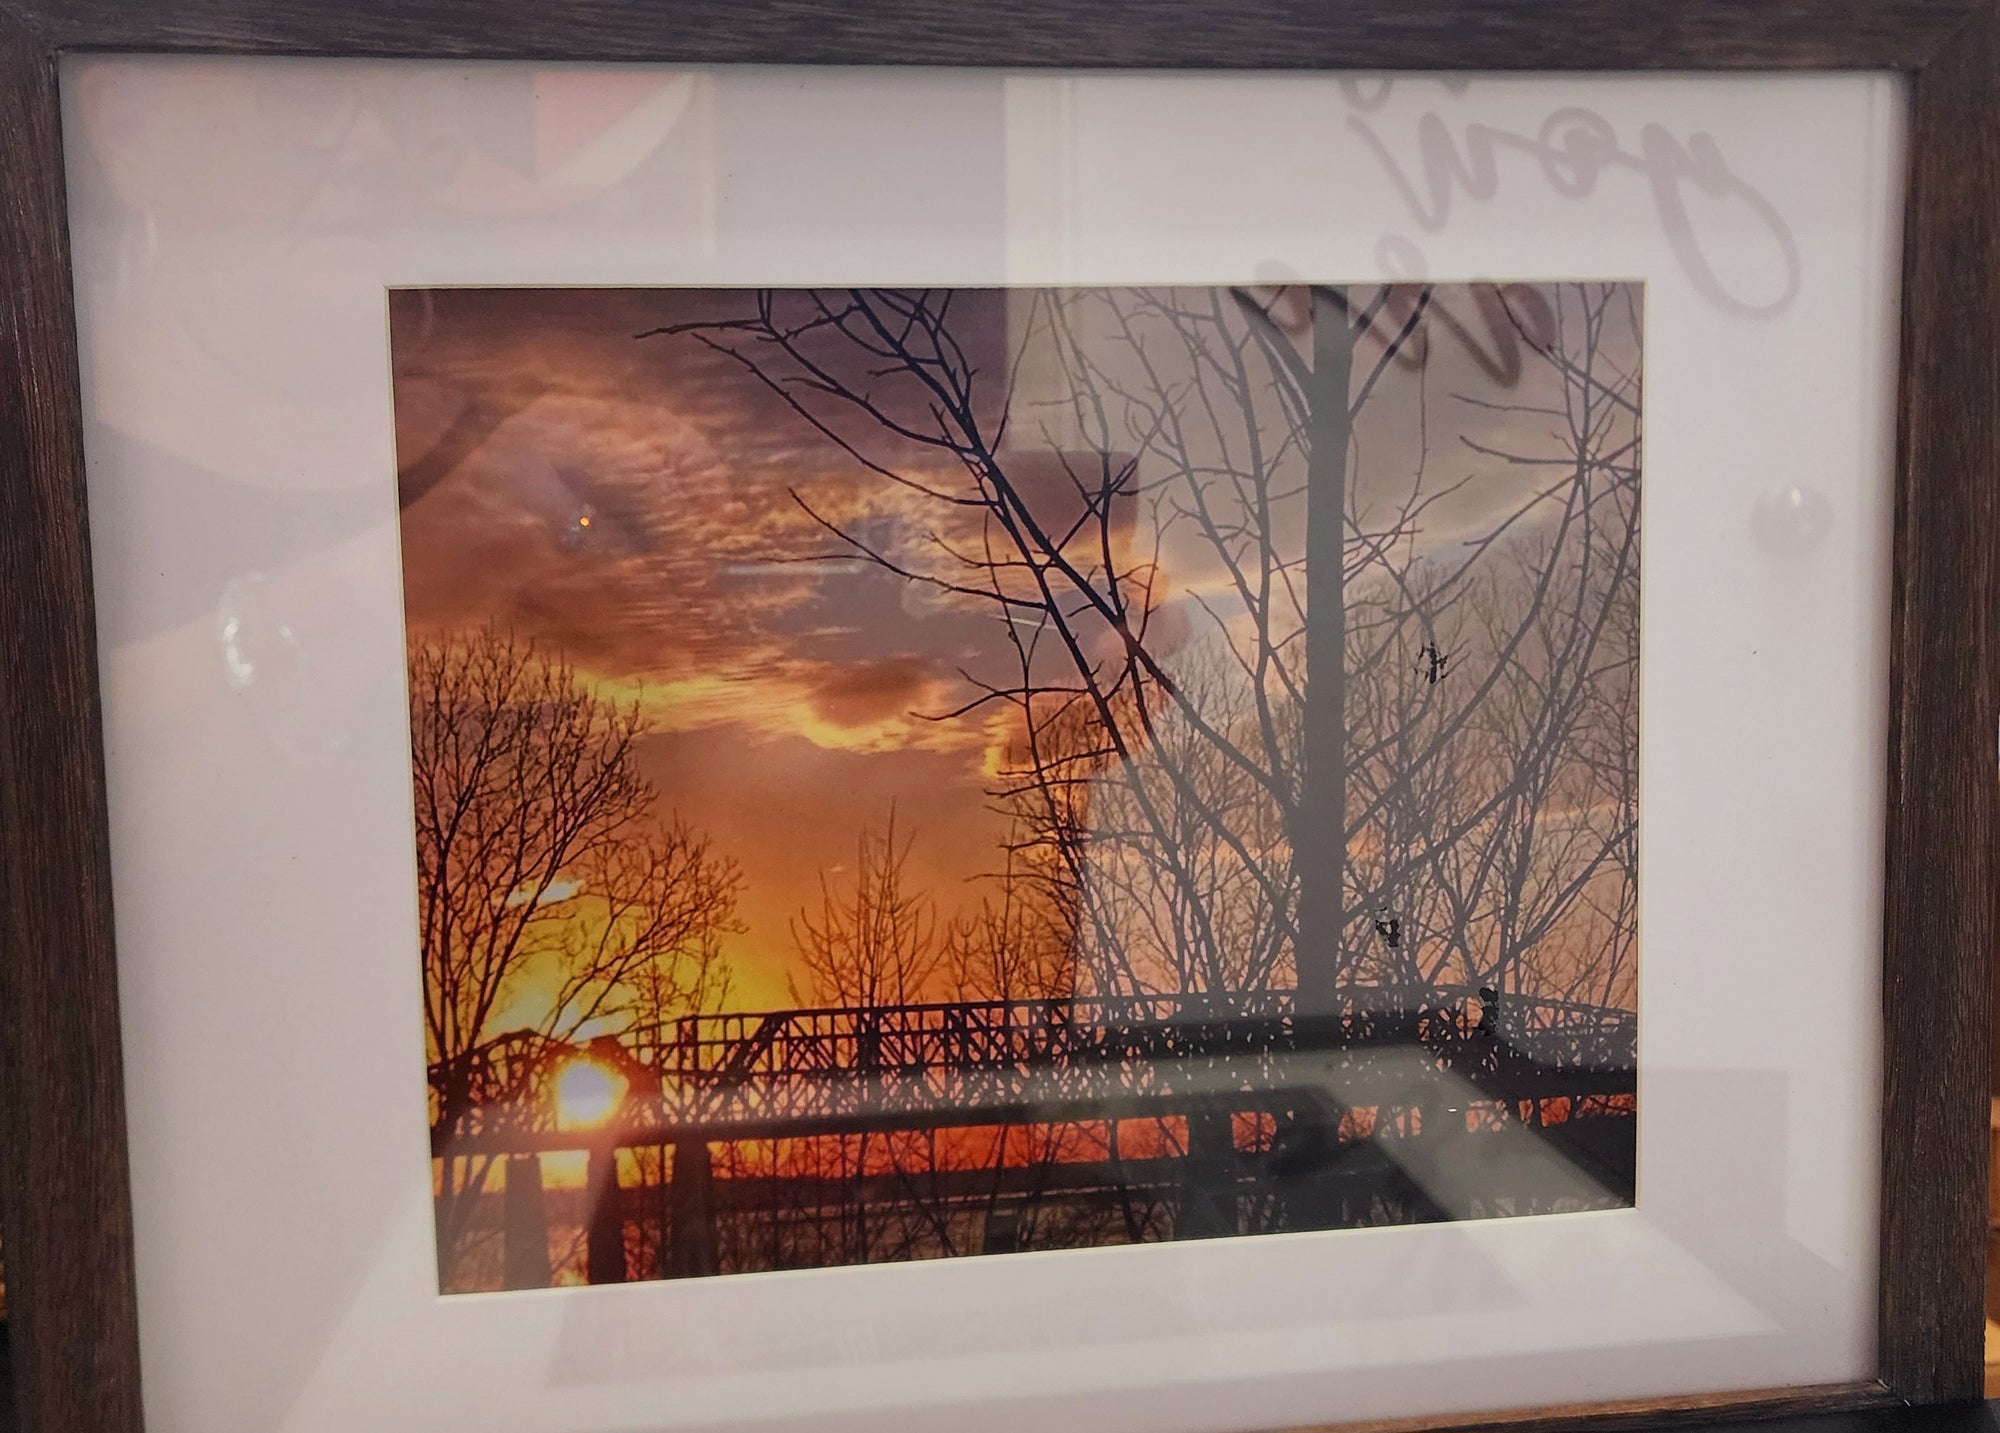 "Old Bridge at Sunset" Framed Photograph by Debra Edge